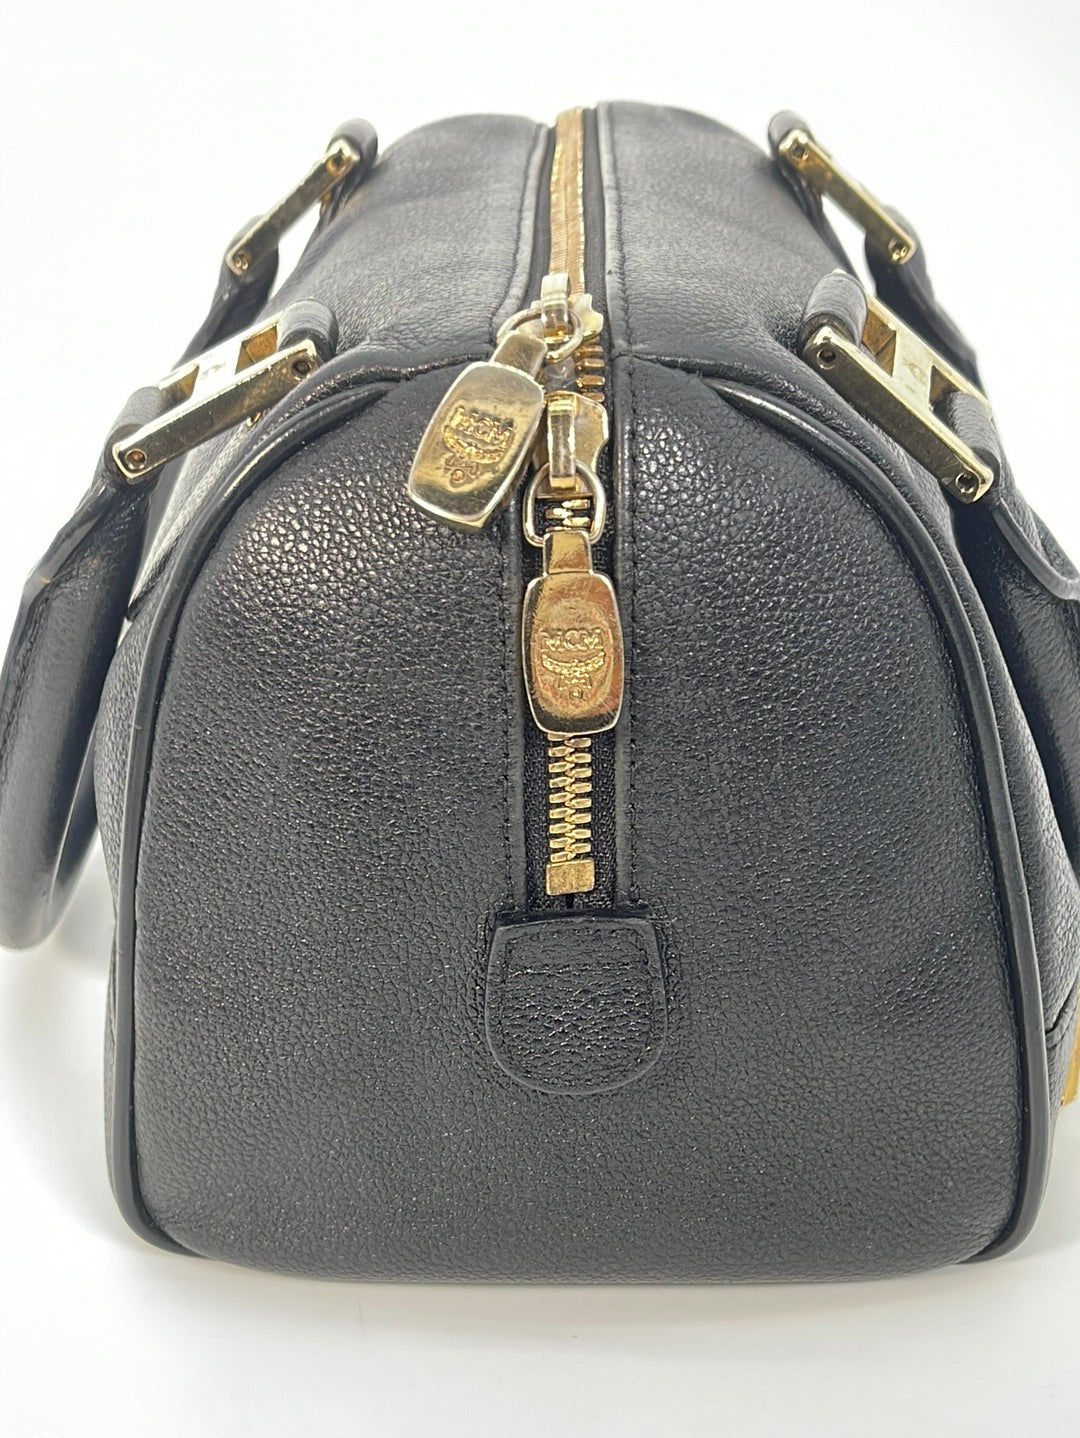 PRELOVED MCM Black Leather and Gold Studded Logo Boston Handbag